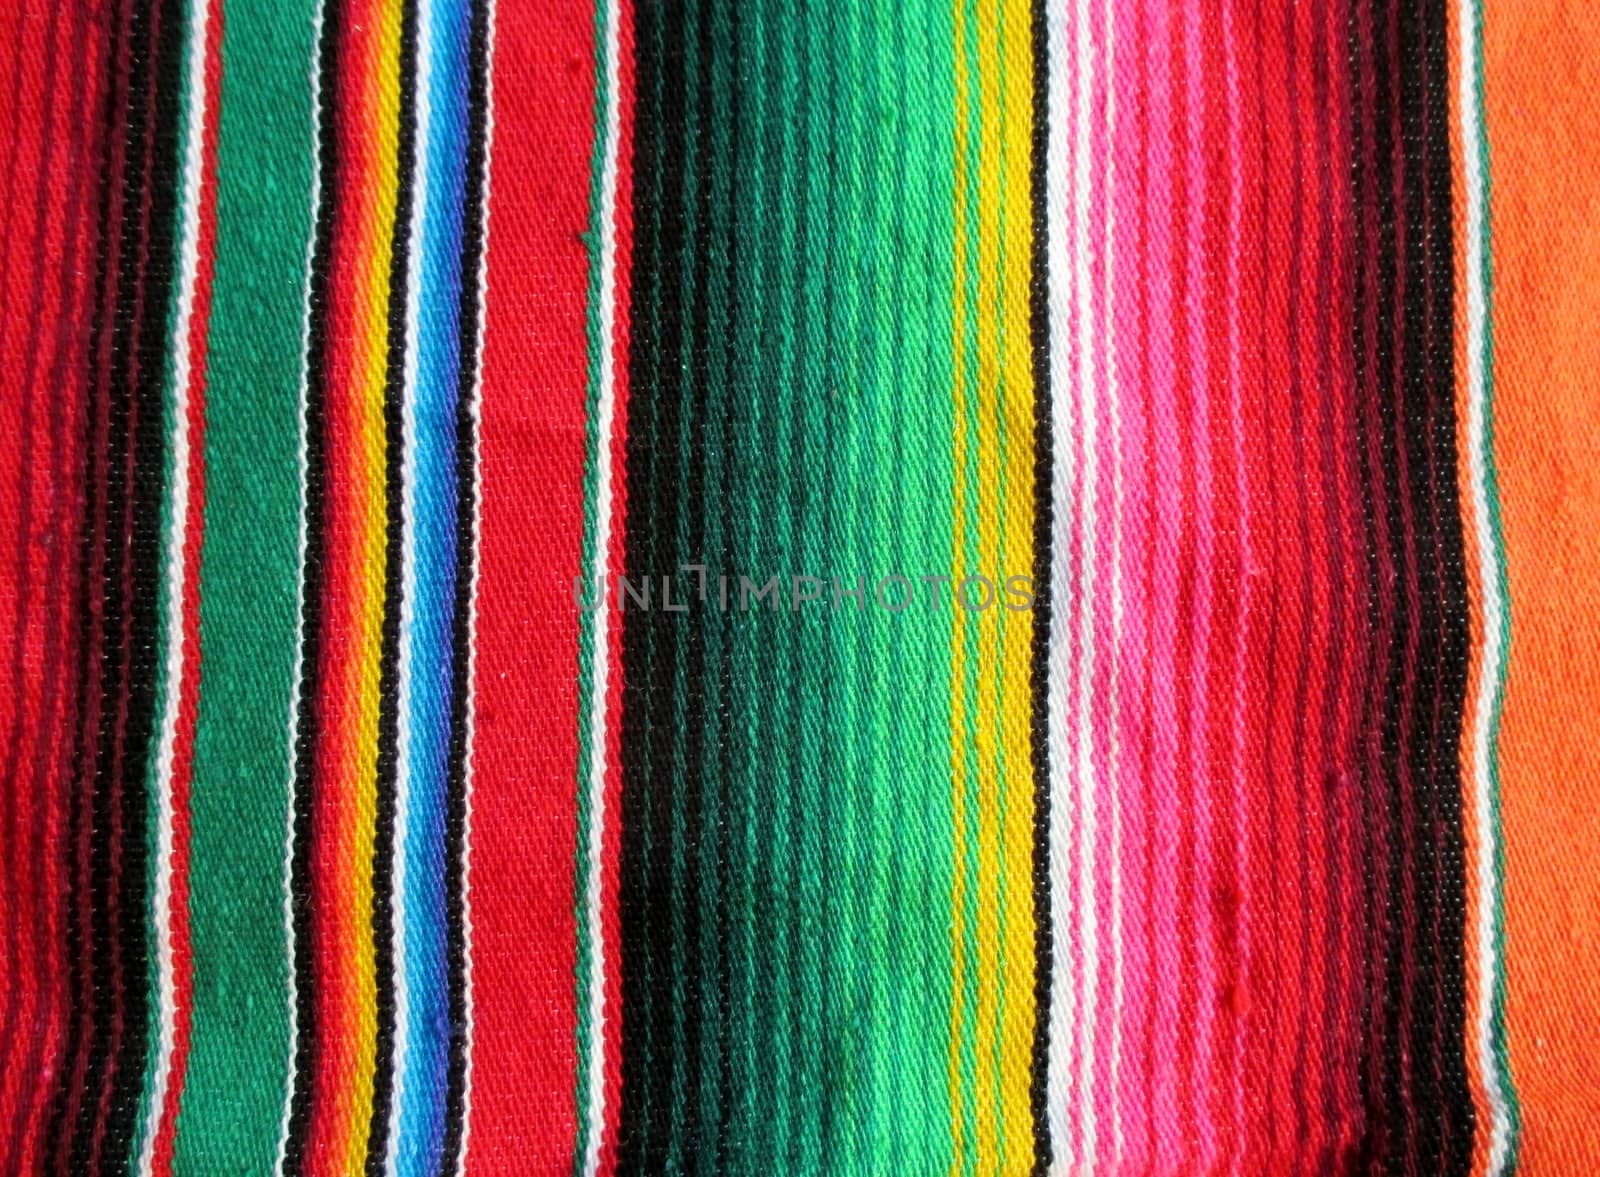 Mexico Poncho Serape Background by cheekylorns